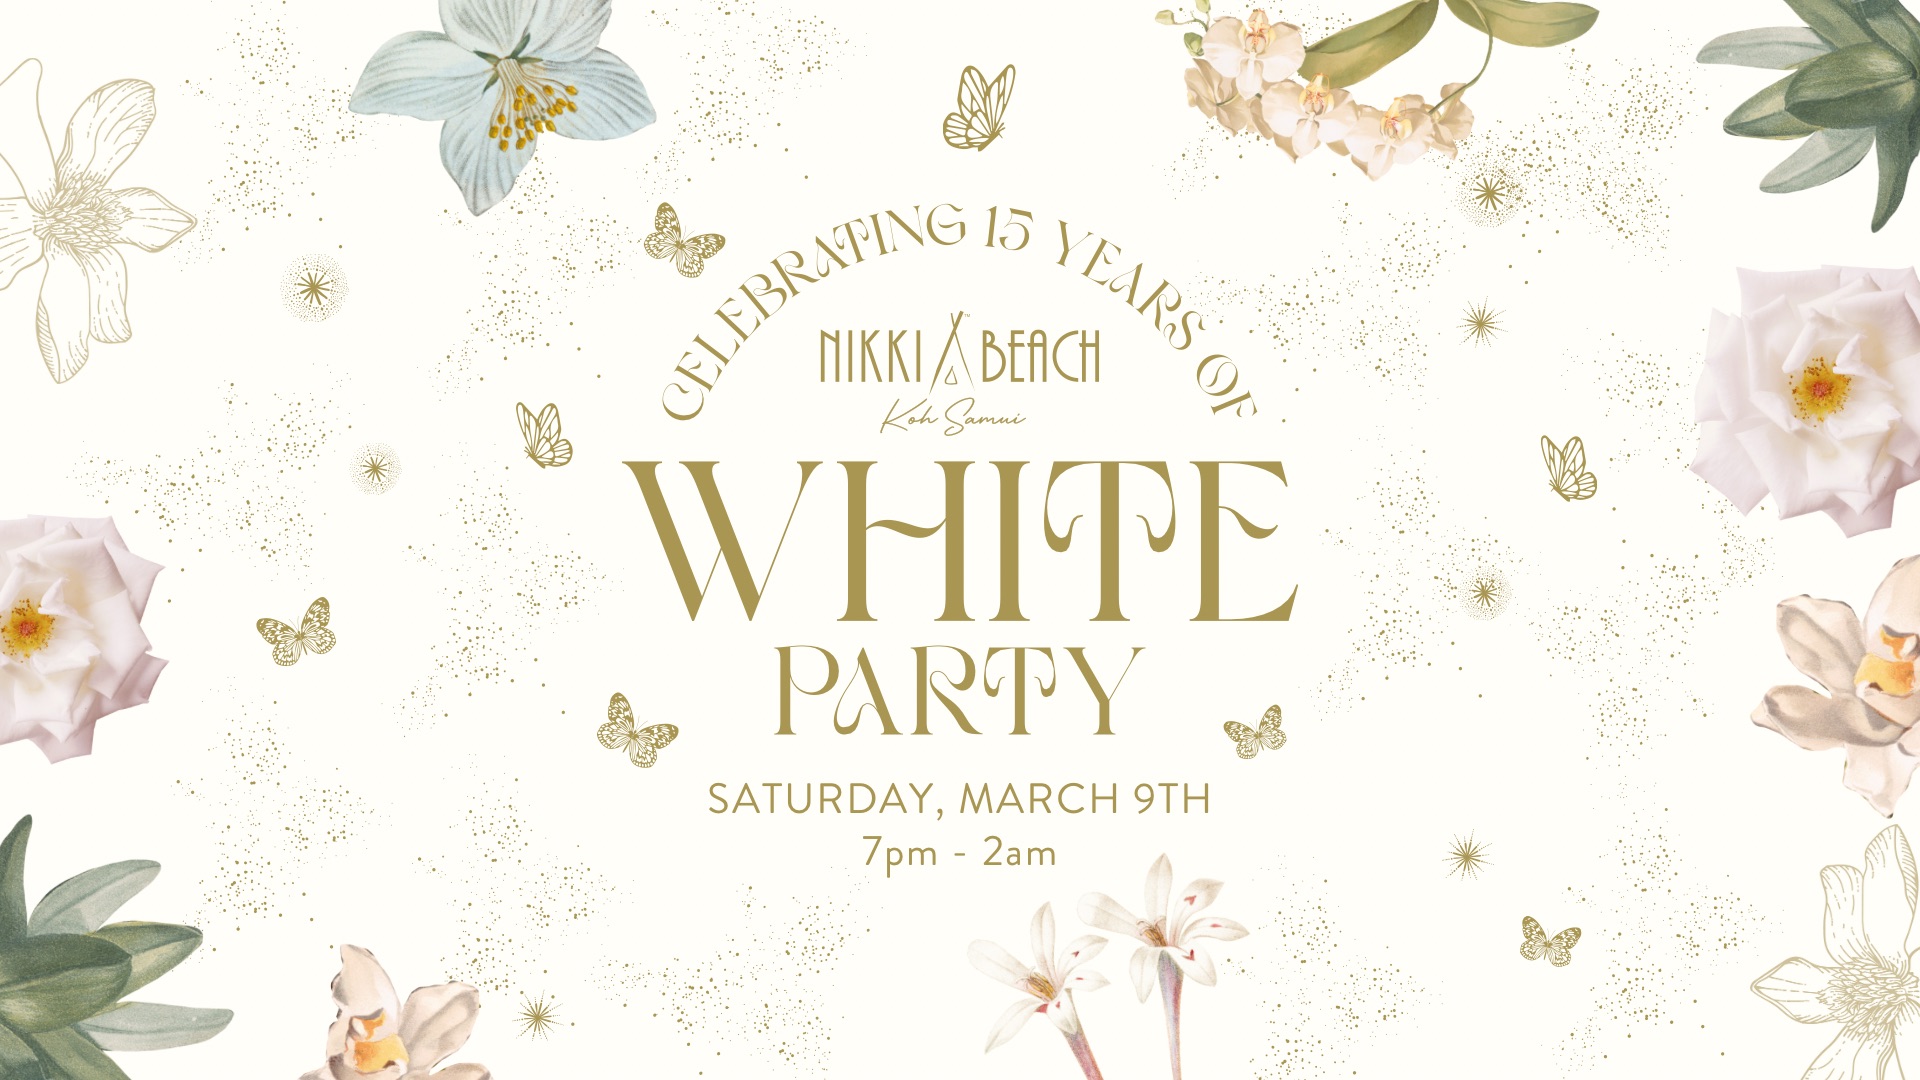 White Party - Εορτασμός 15 χρόνων από την παραλία Nikki Koh Samui